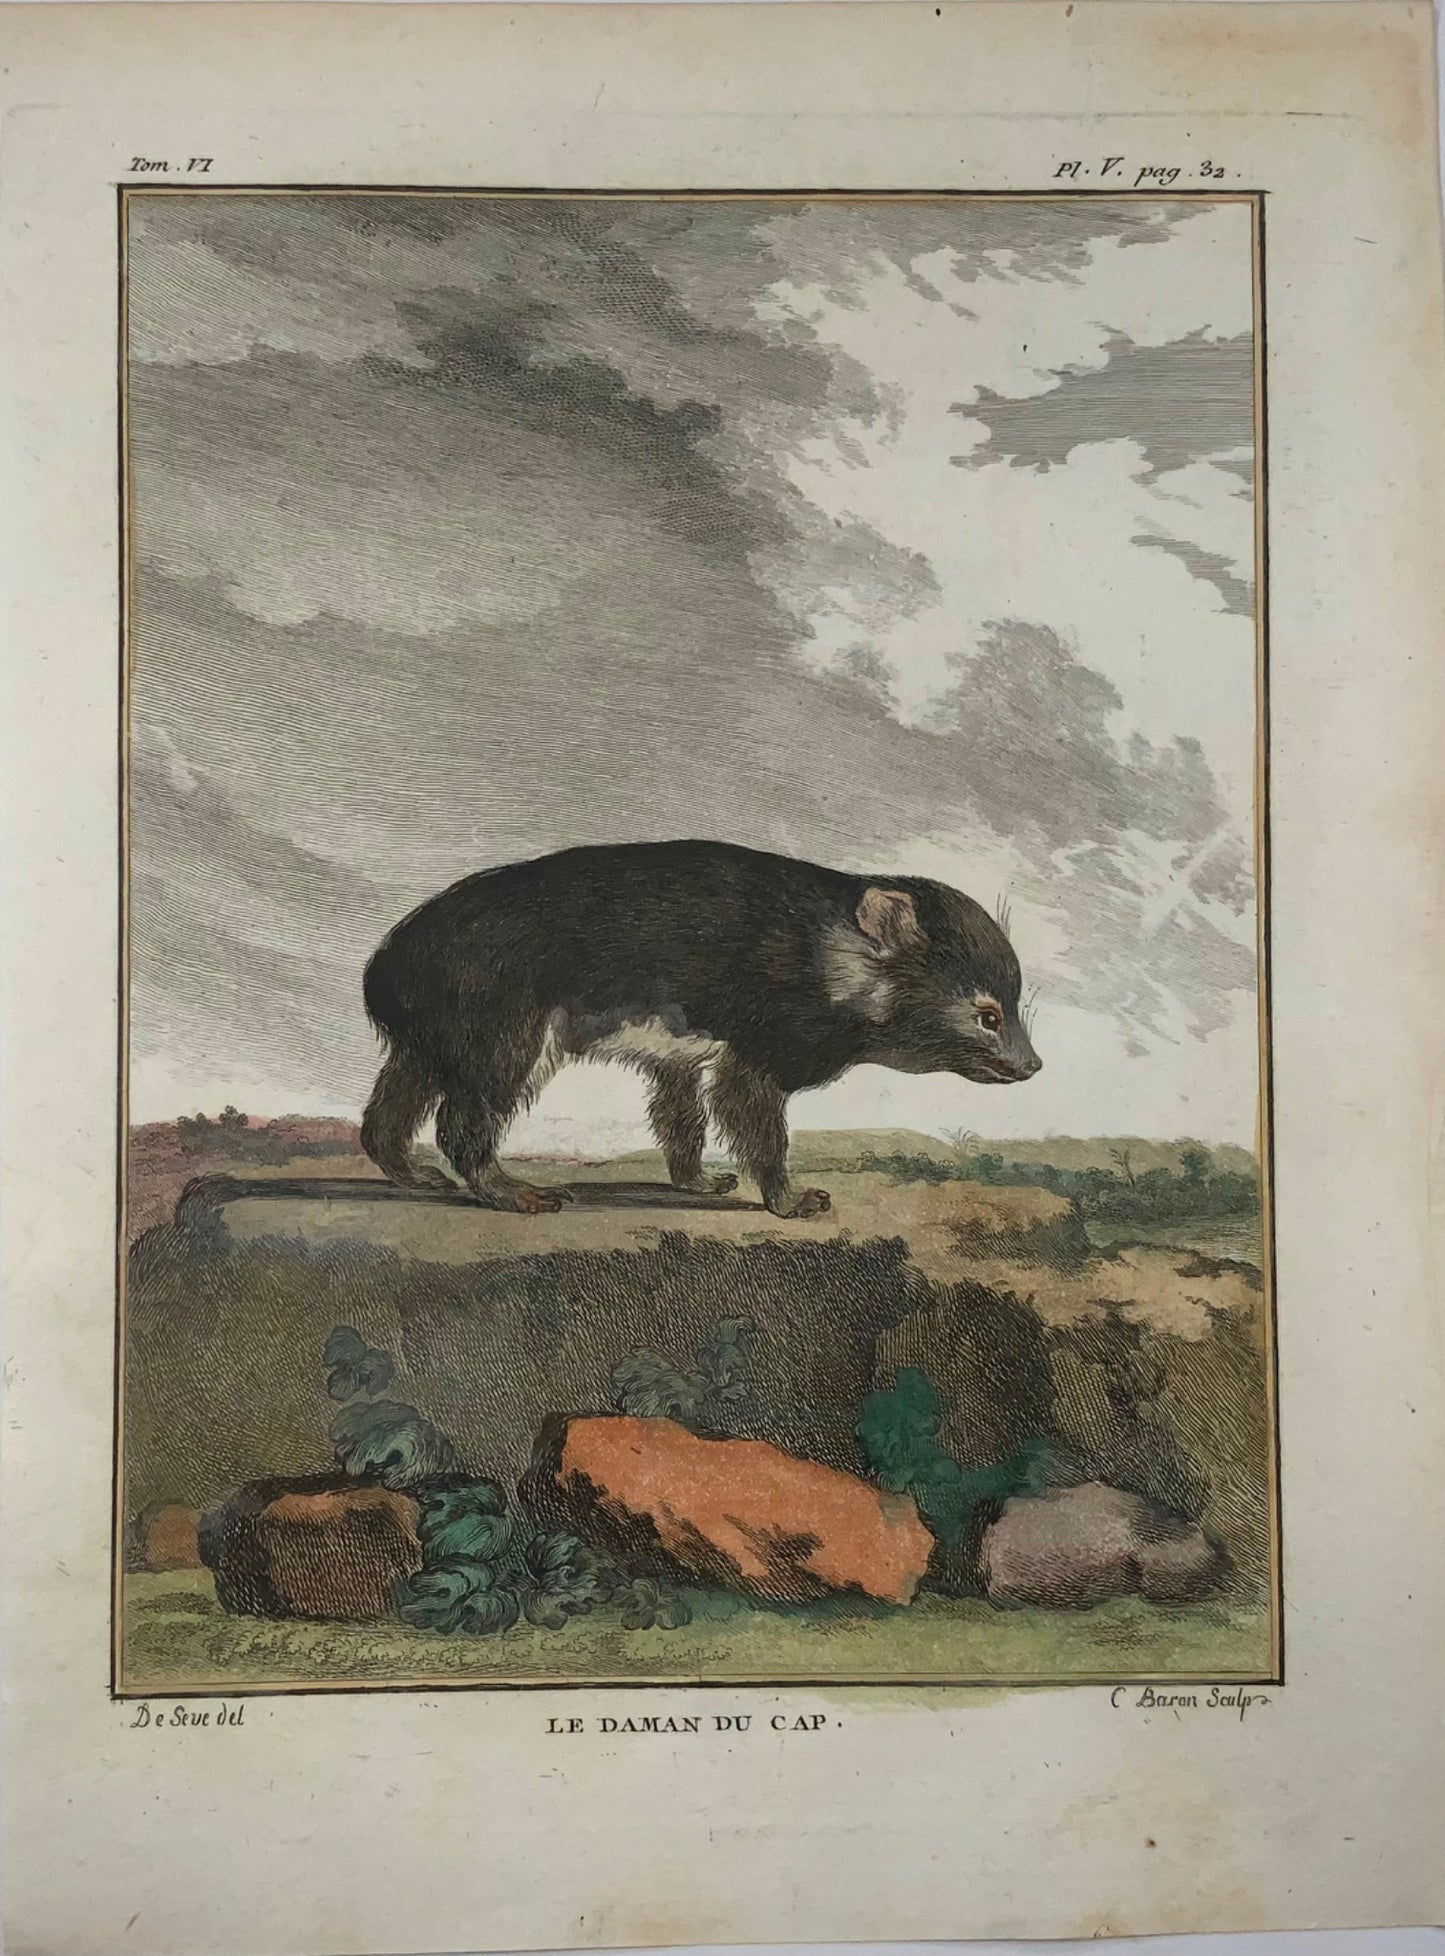 1779 Rock Hyrax; J. de Seve, Mammal, 4to engraving